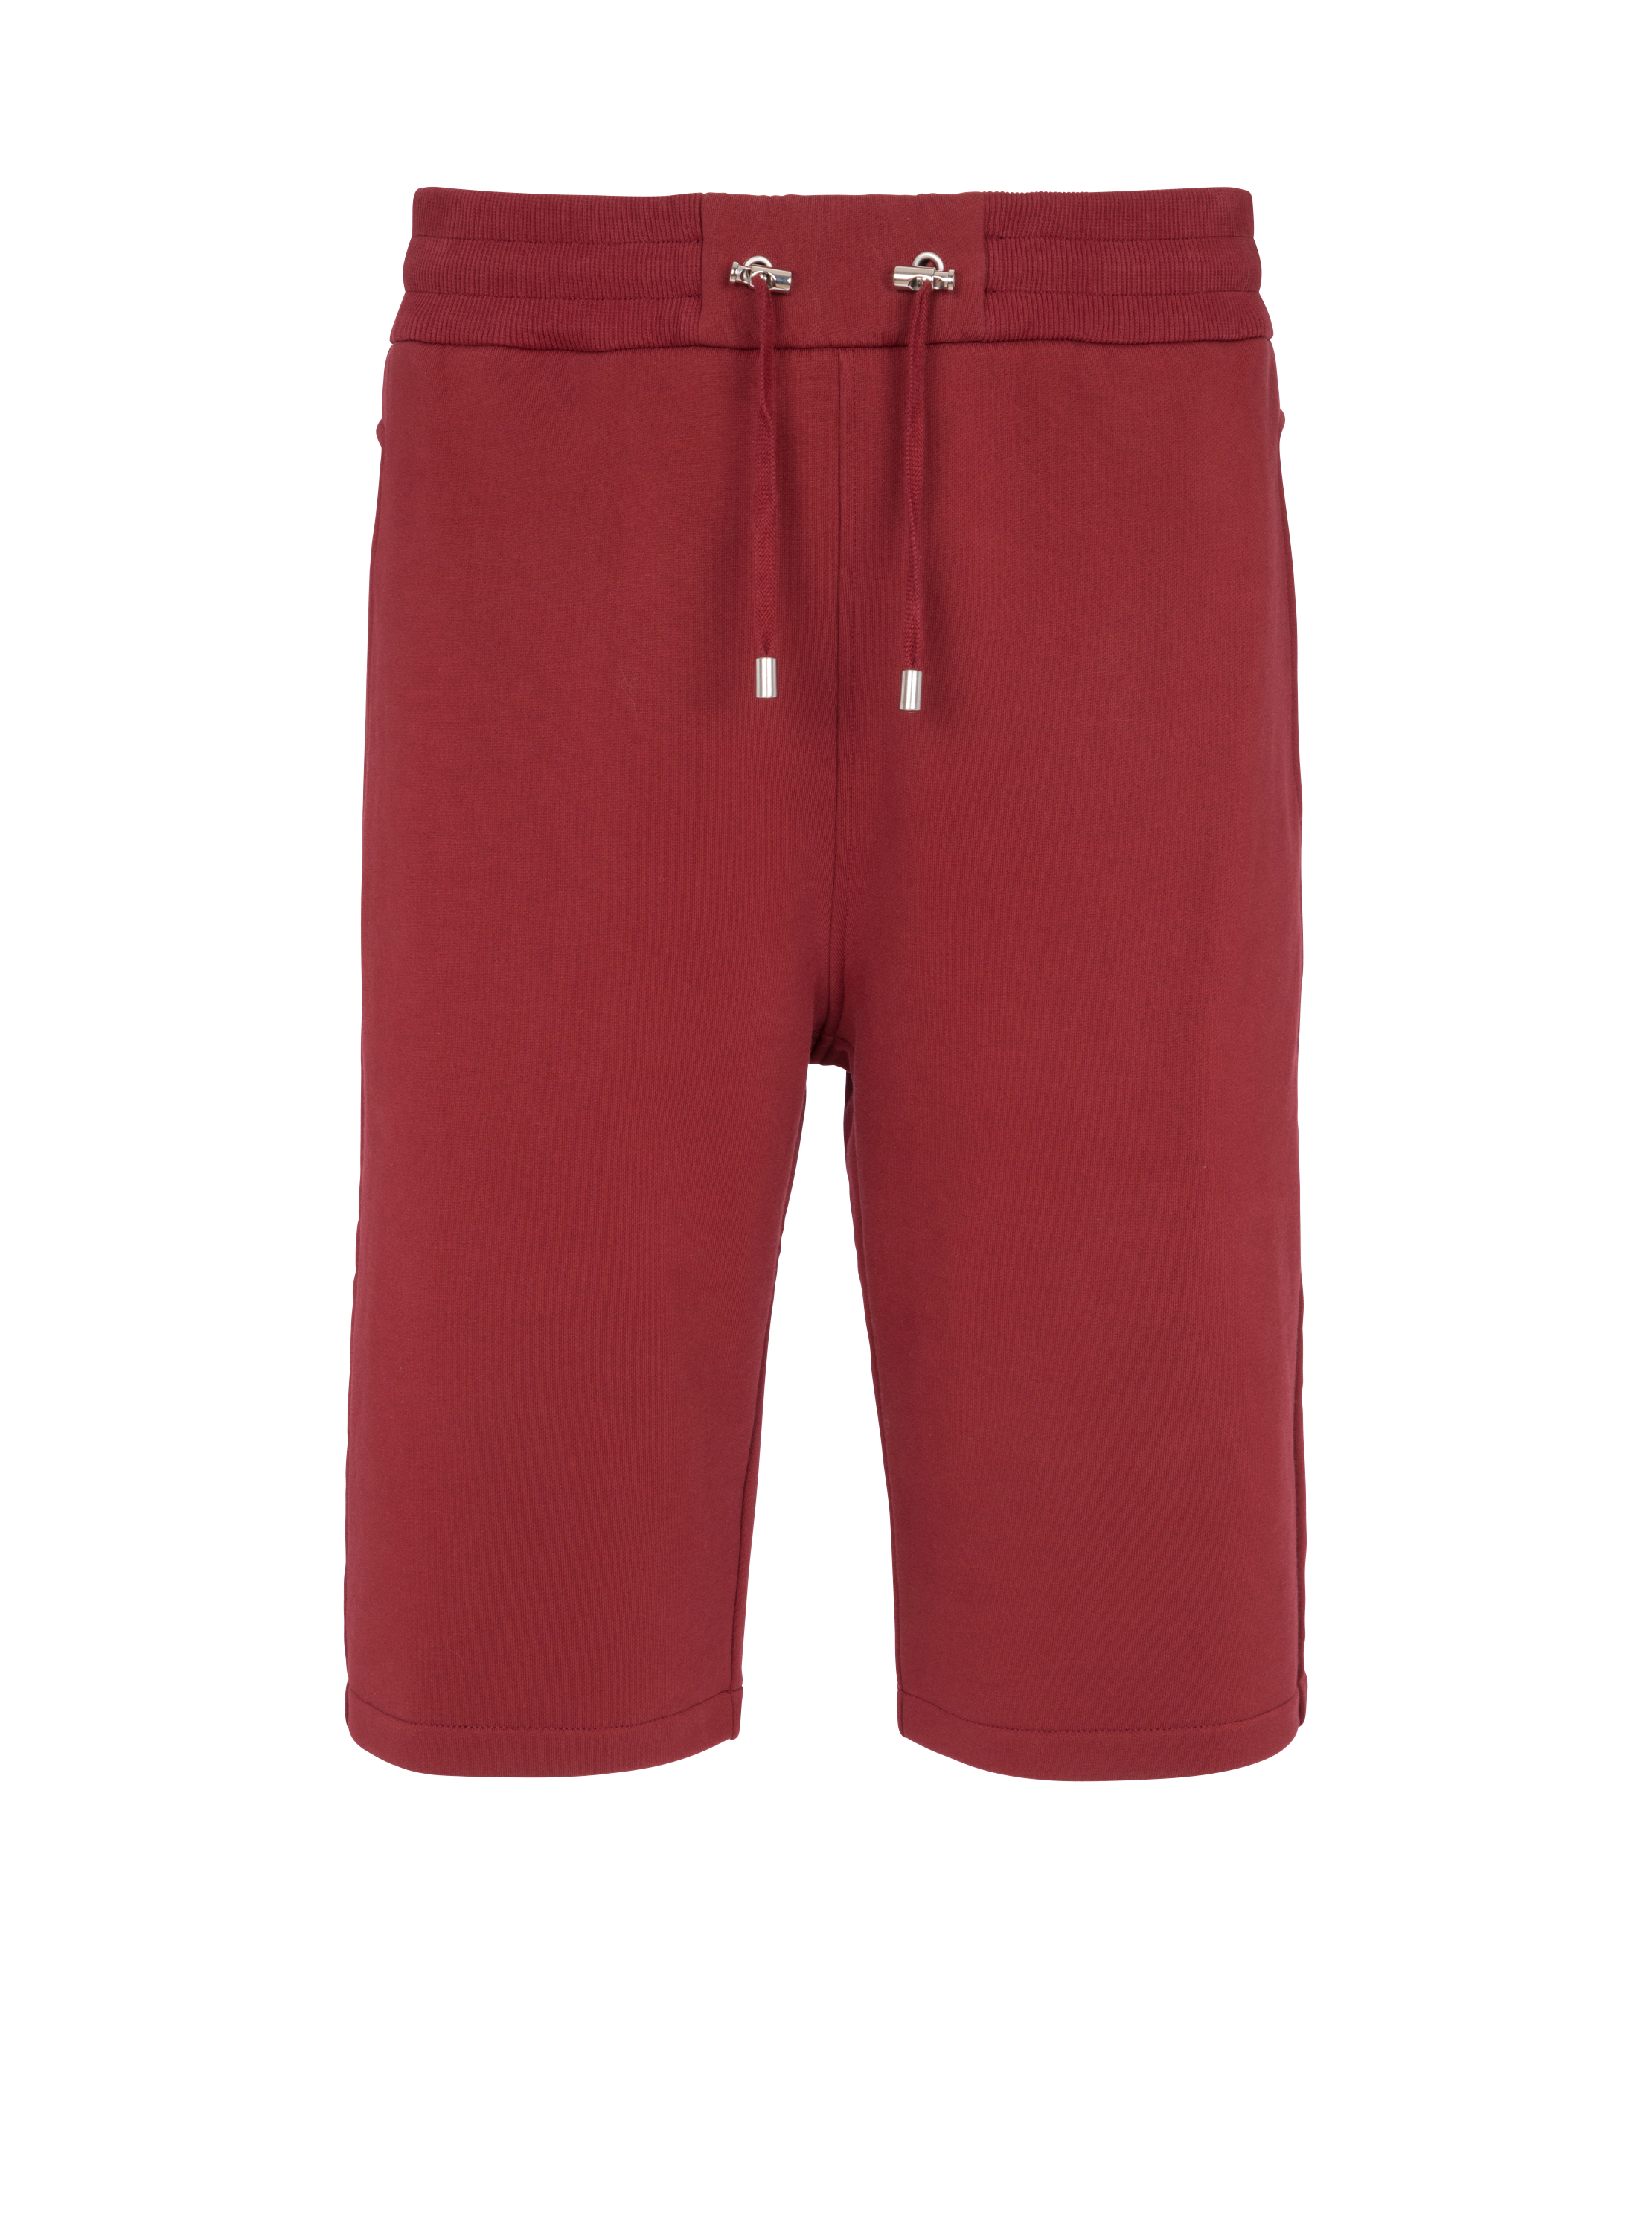 Flocked Balmain shorts, red, hi-res